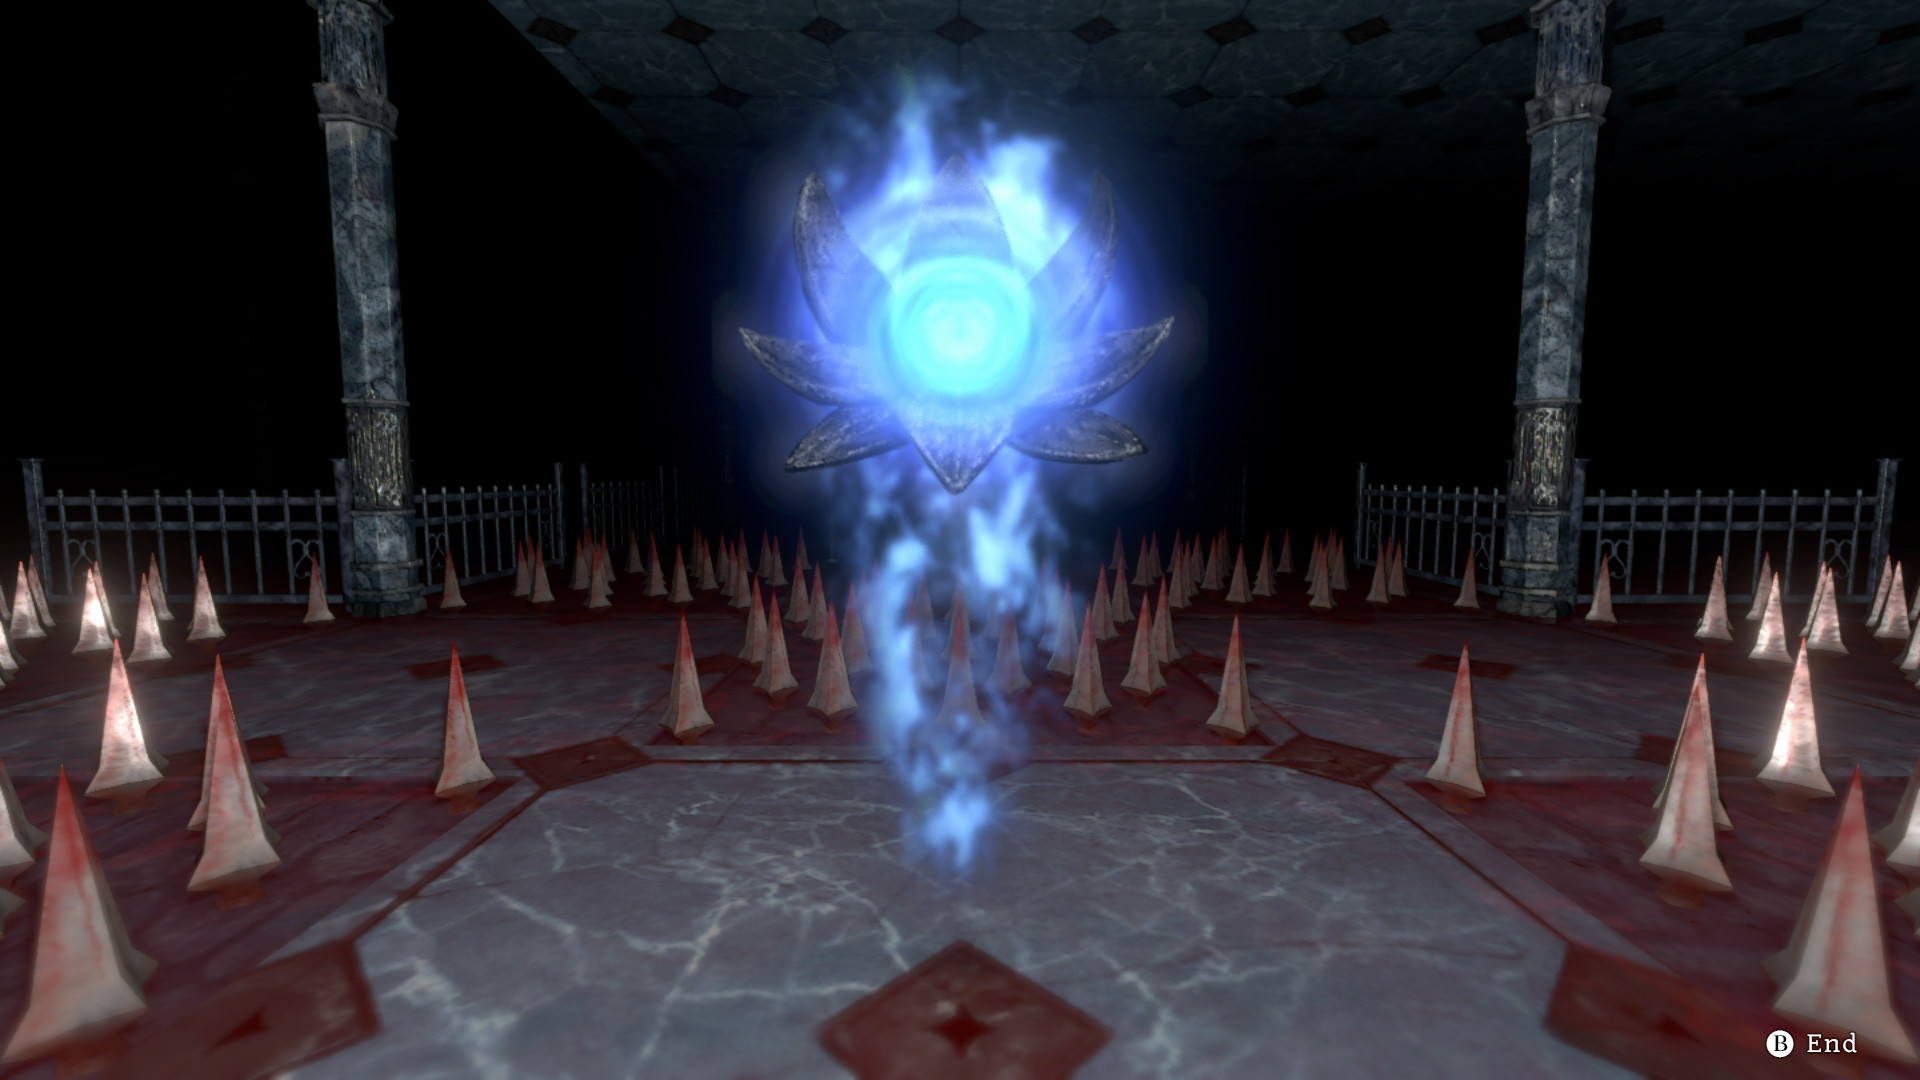 Undernauts: Labyrinth Of Yomi Steam CD Key